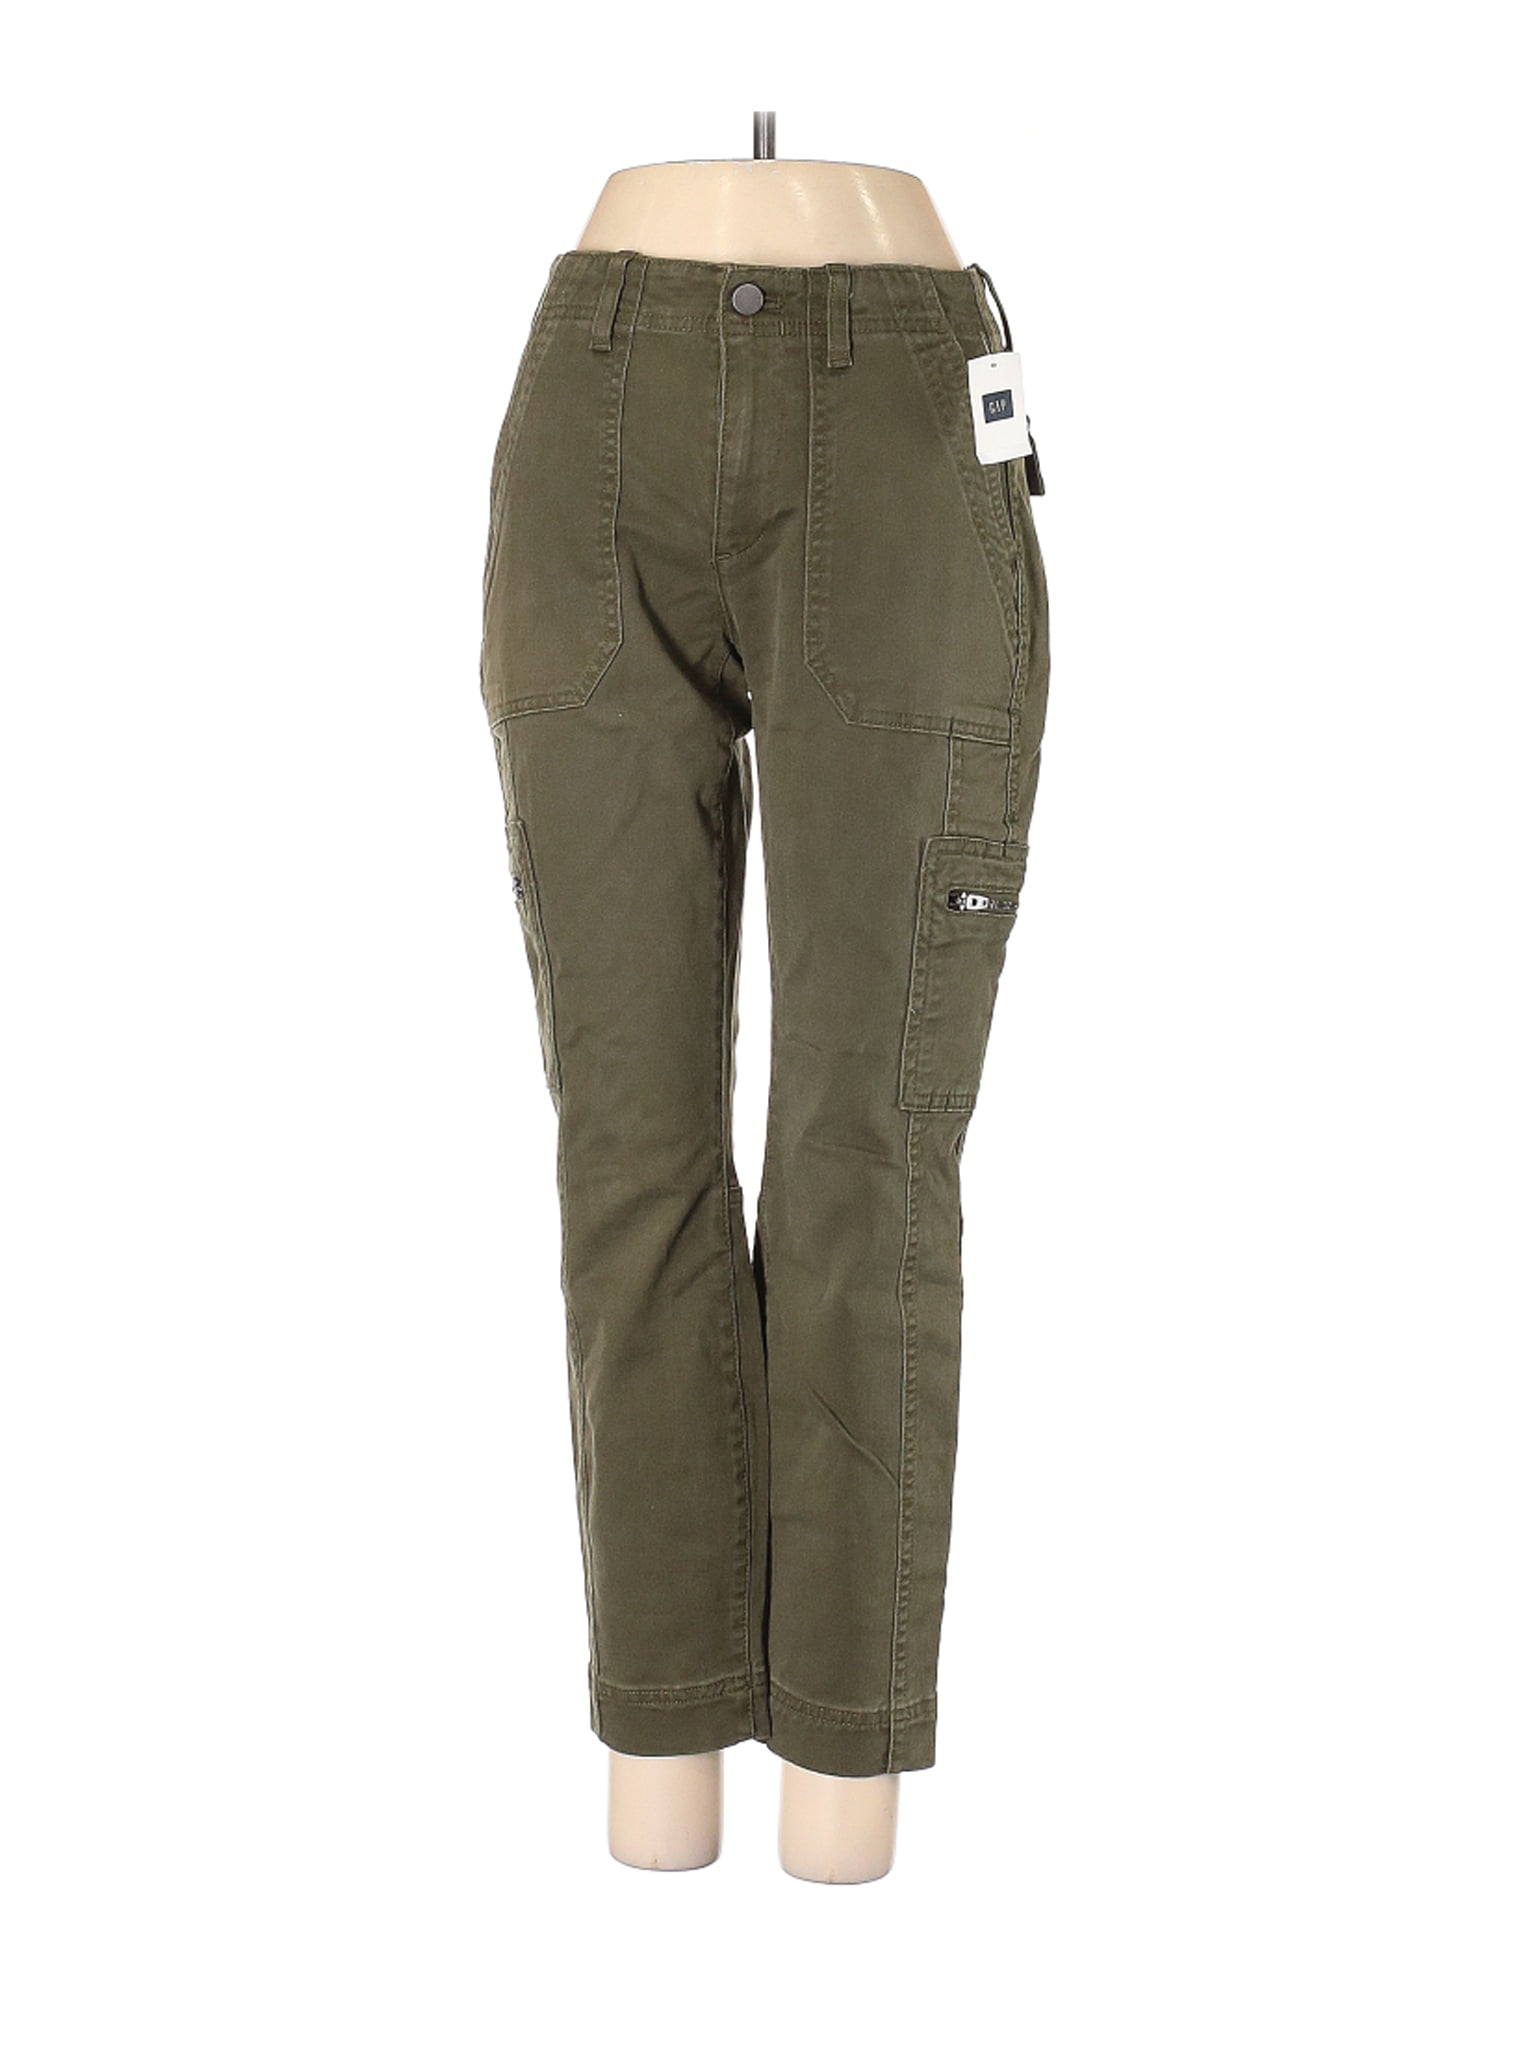 Gap - Pre-Owned Gap Women's Size 00 Cargo Pants - Walmart.com - Walmart.com